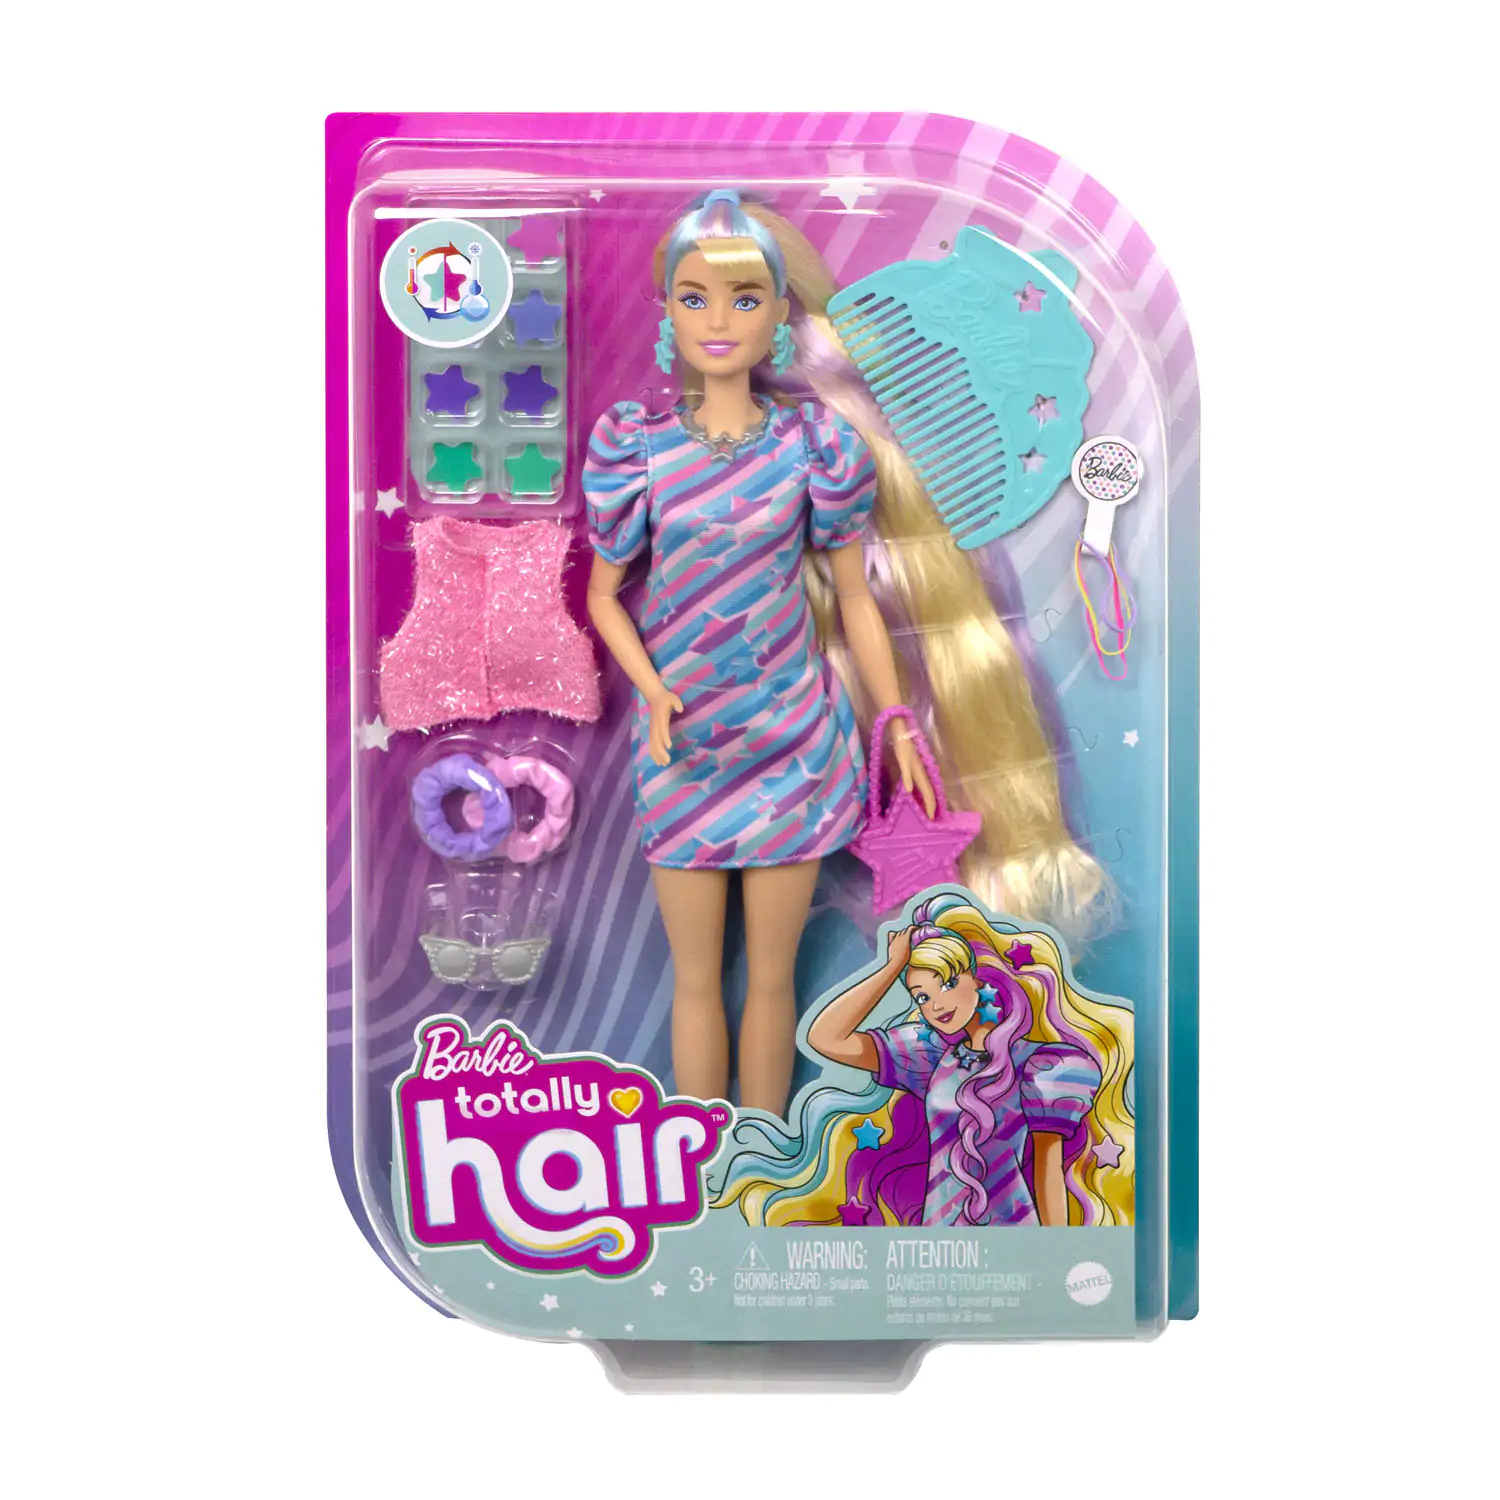 Barbie Totally Hair – Star